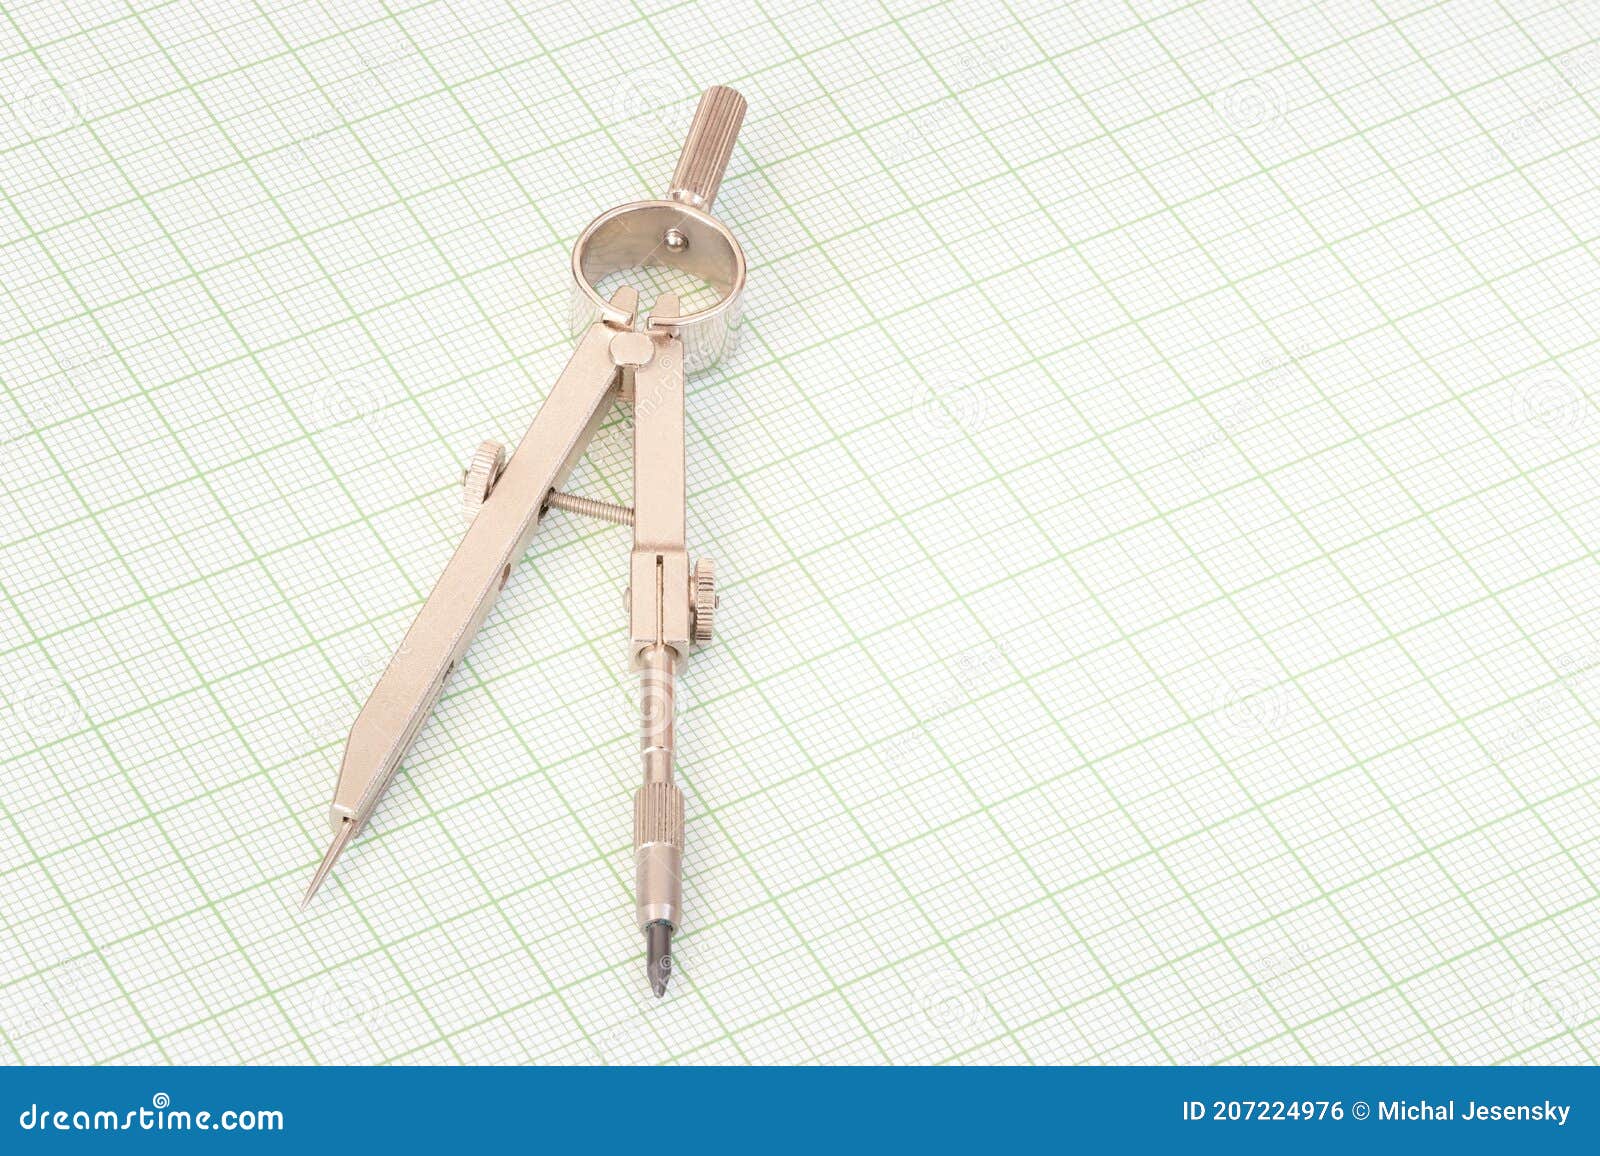 steel compasses on a millimetre paper